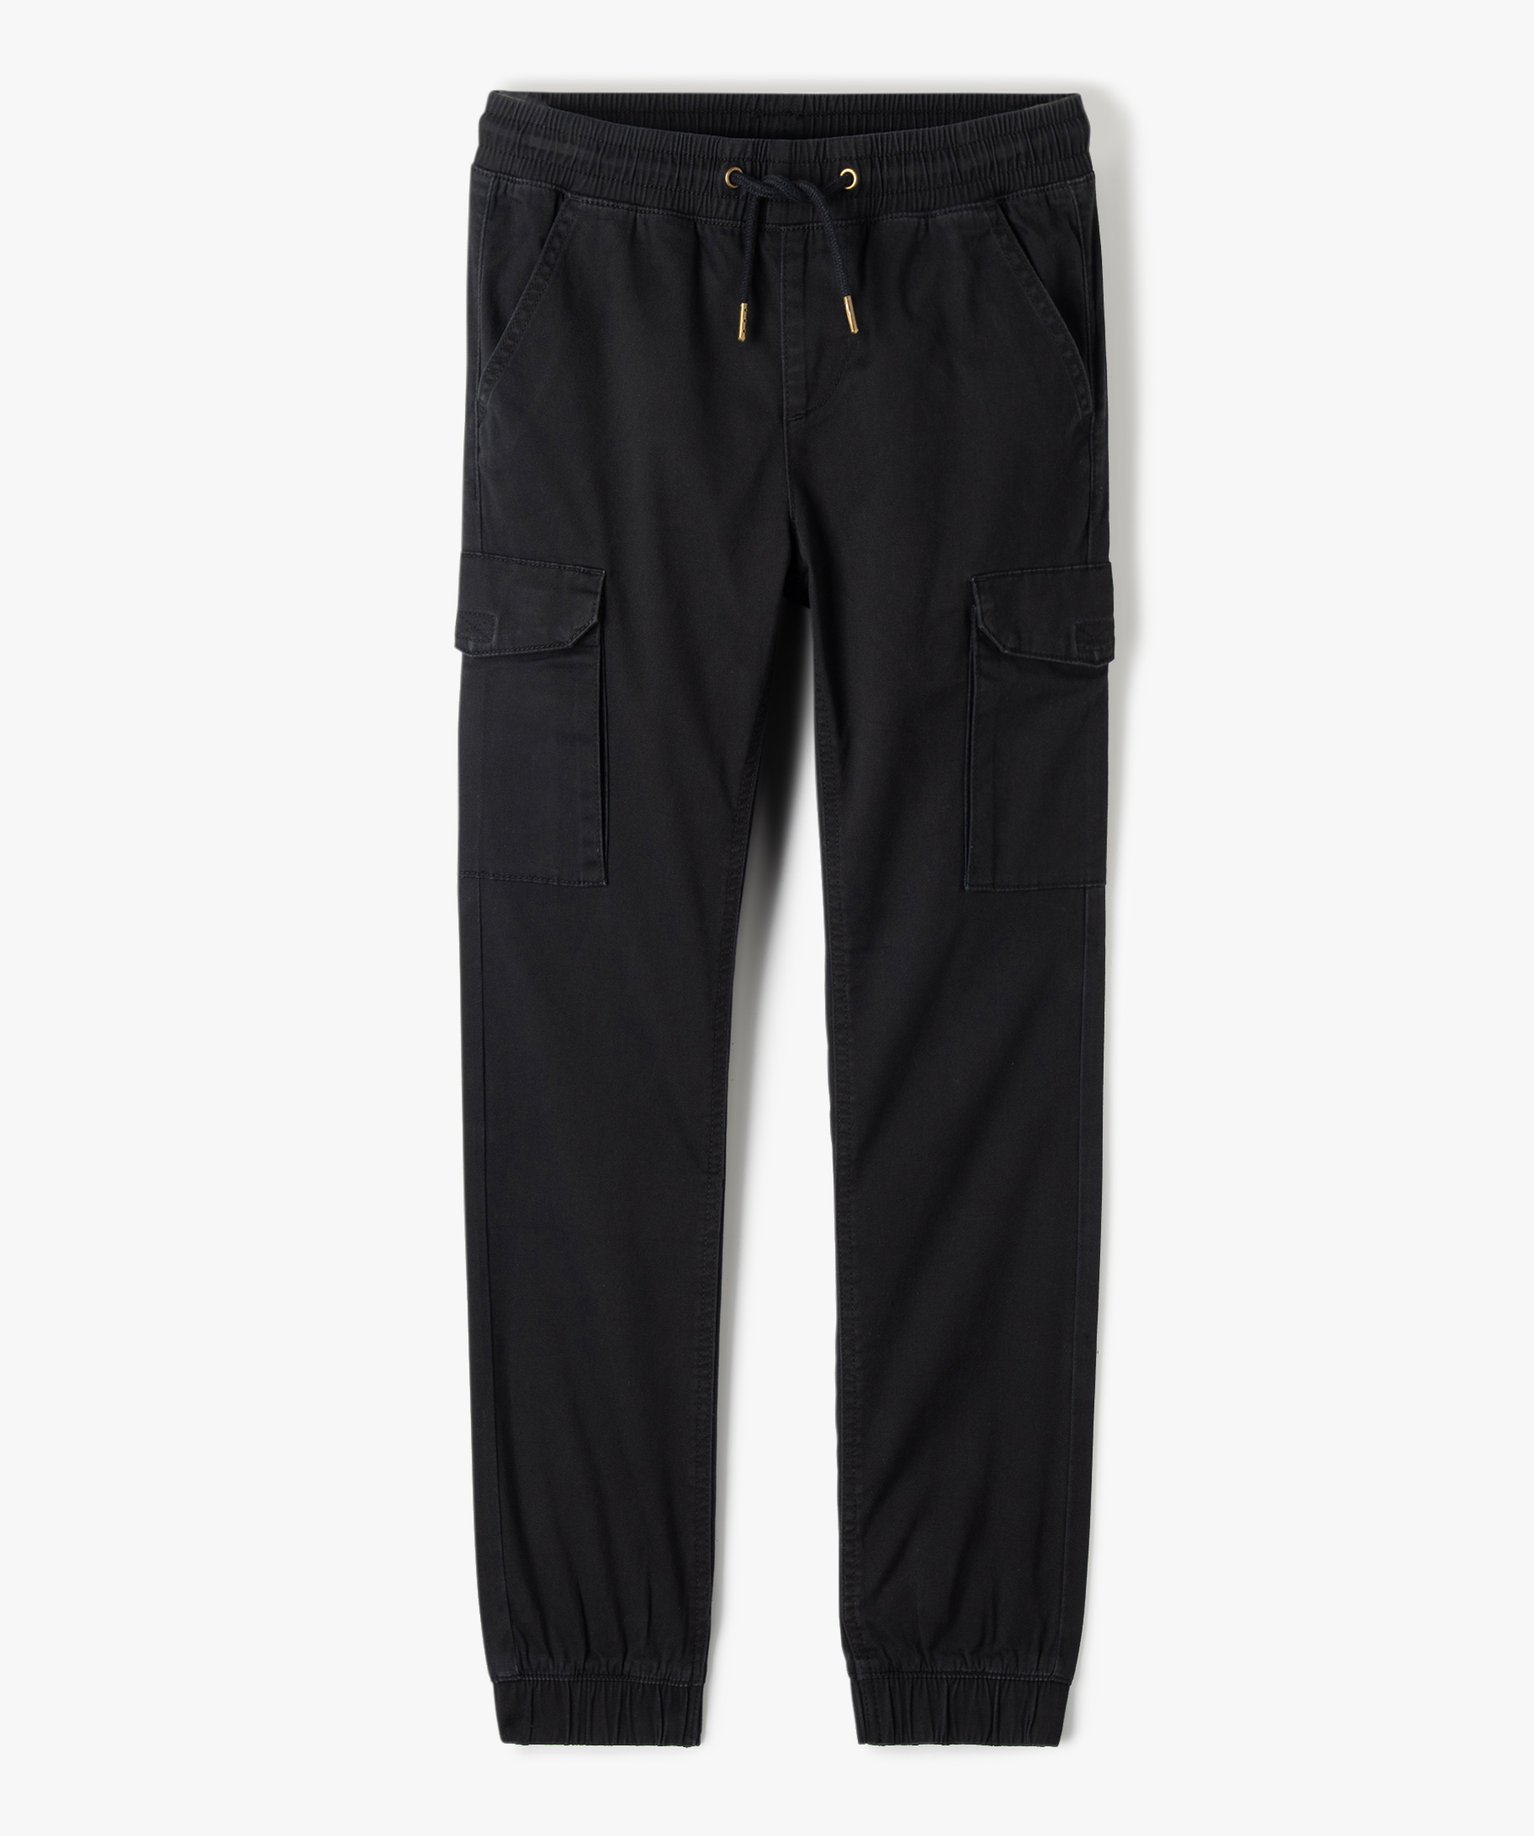 pantalon garcon en toile unie coupe jogger noir pantalons